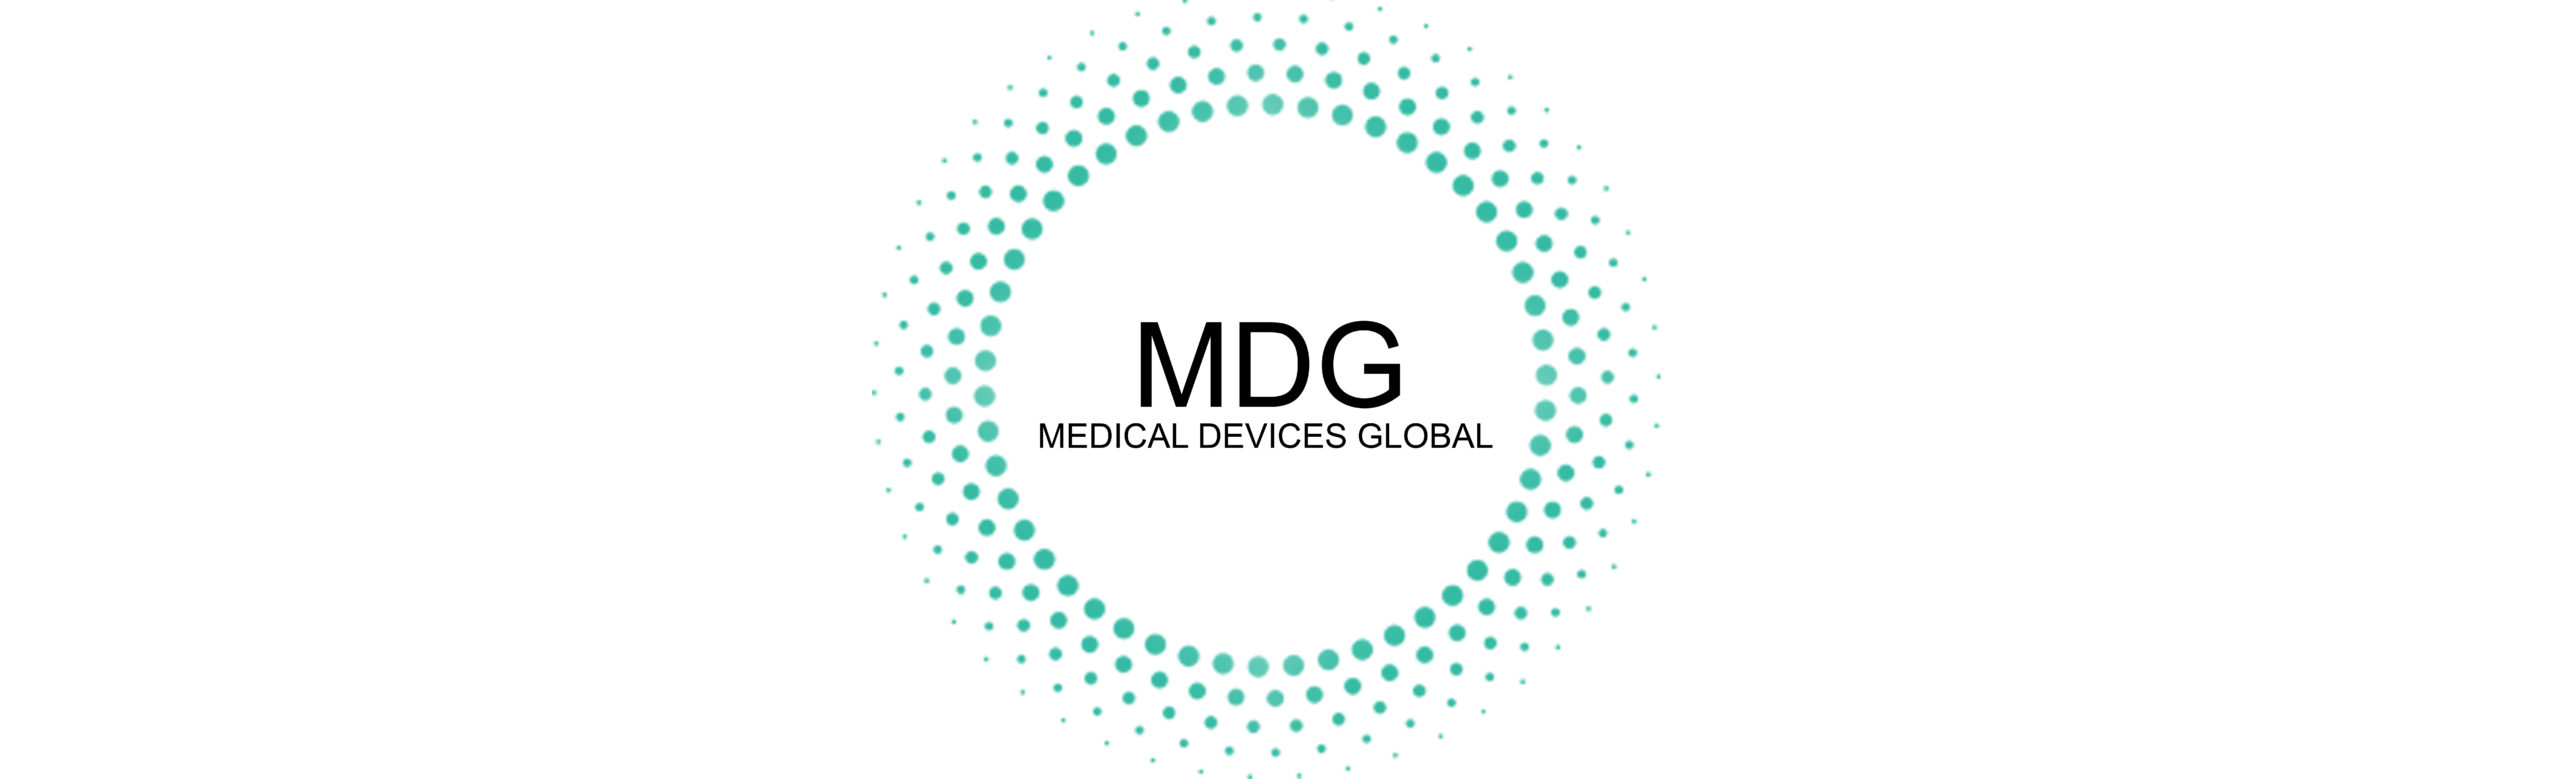 MDG logo